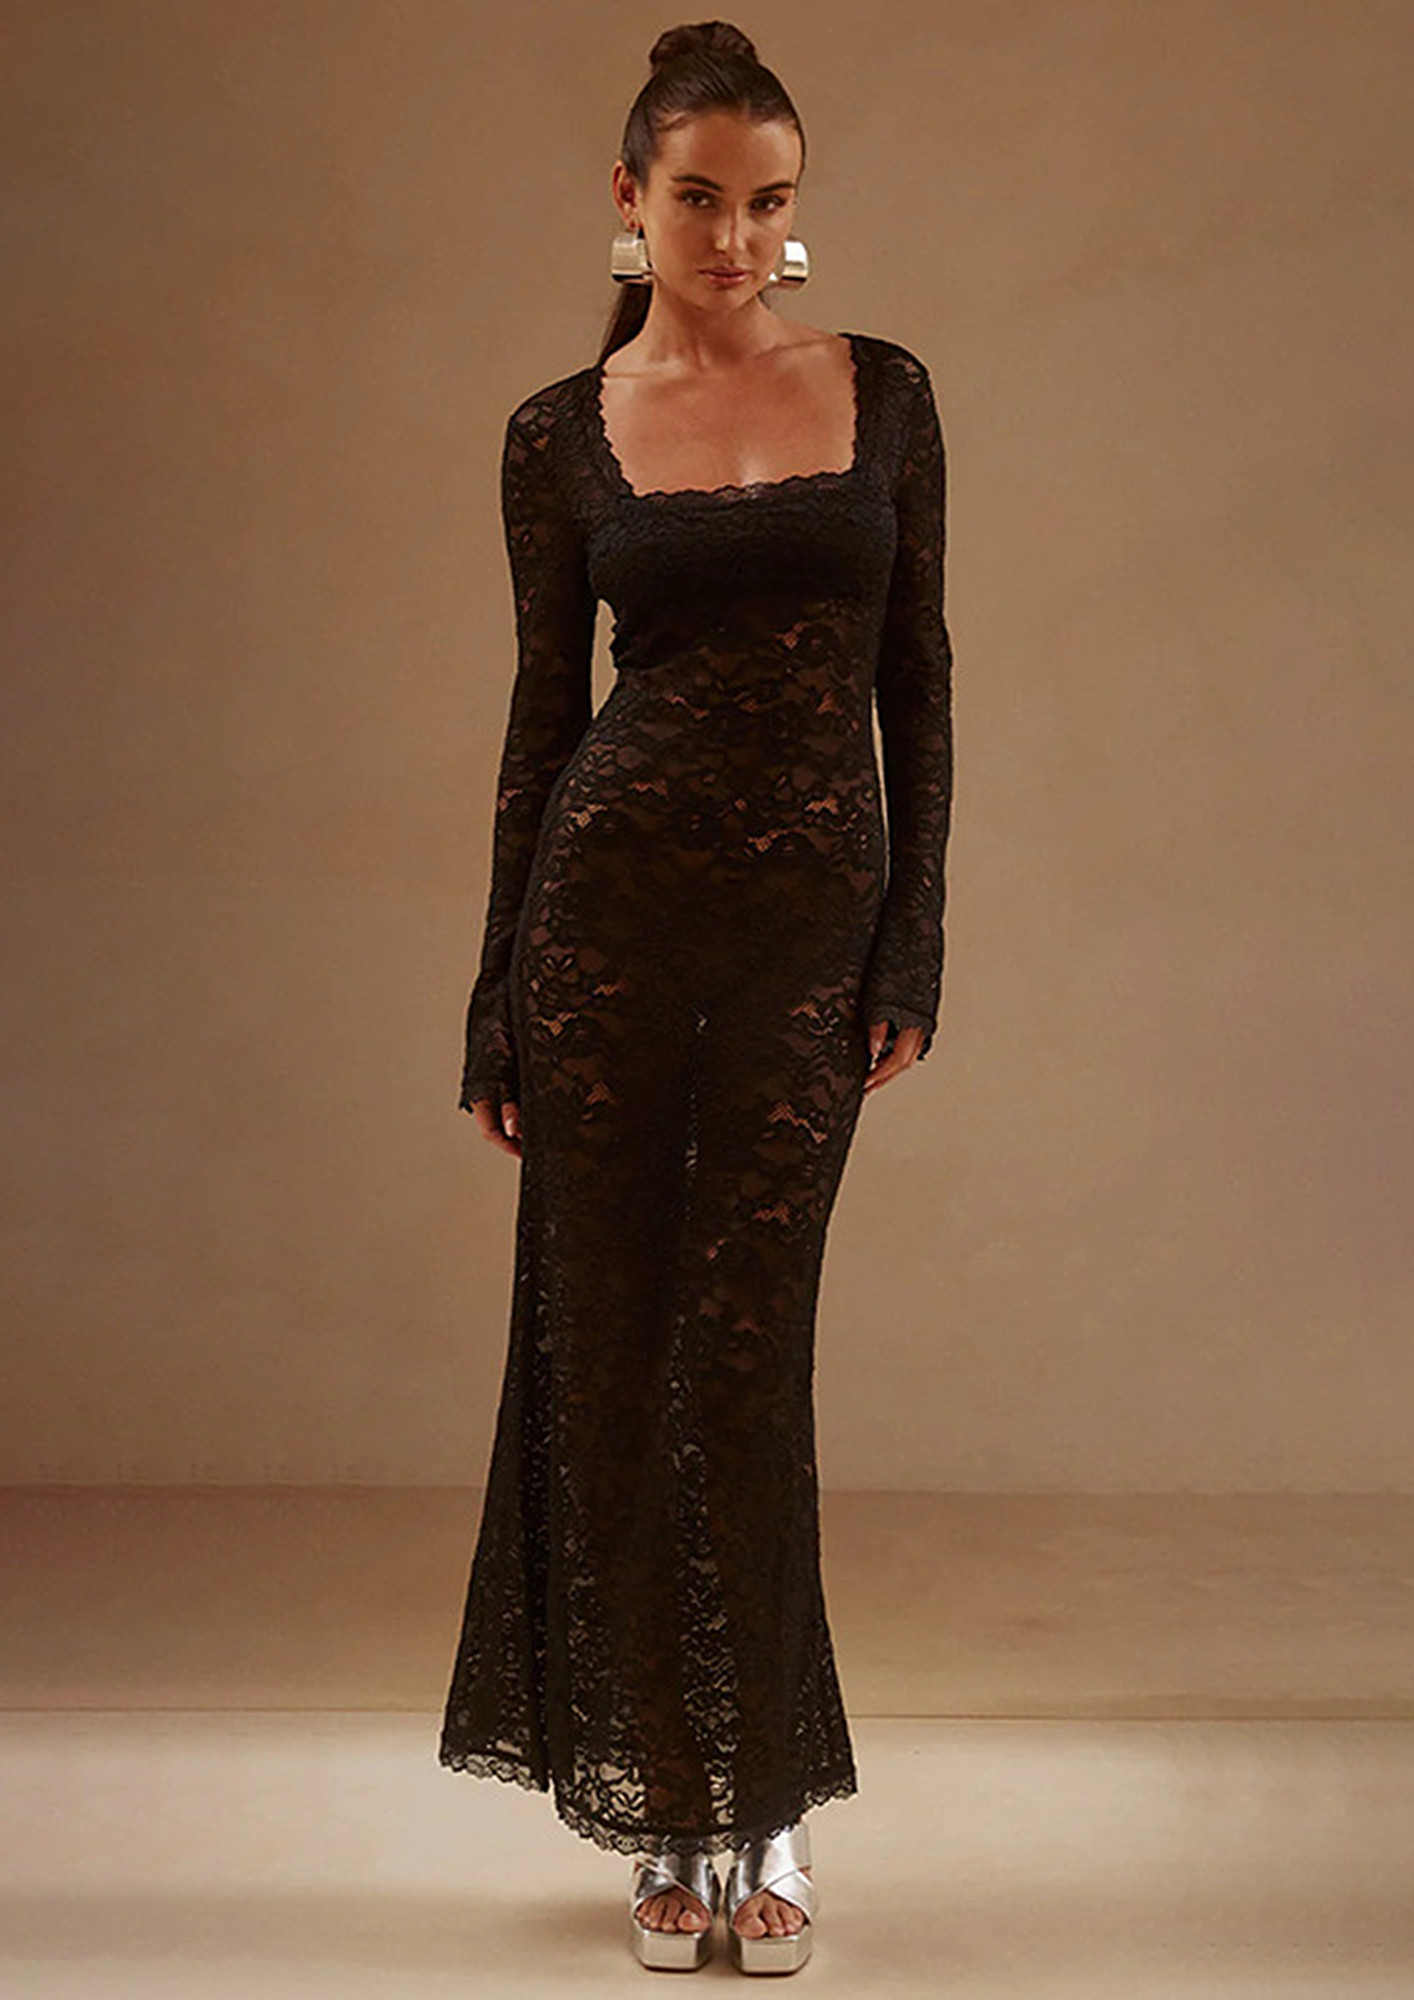 Sheer Black See-through Prom Dress Selena Gomez - VQ